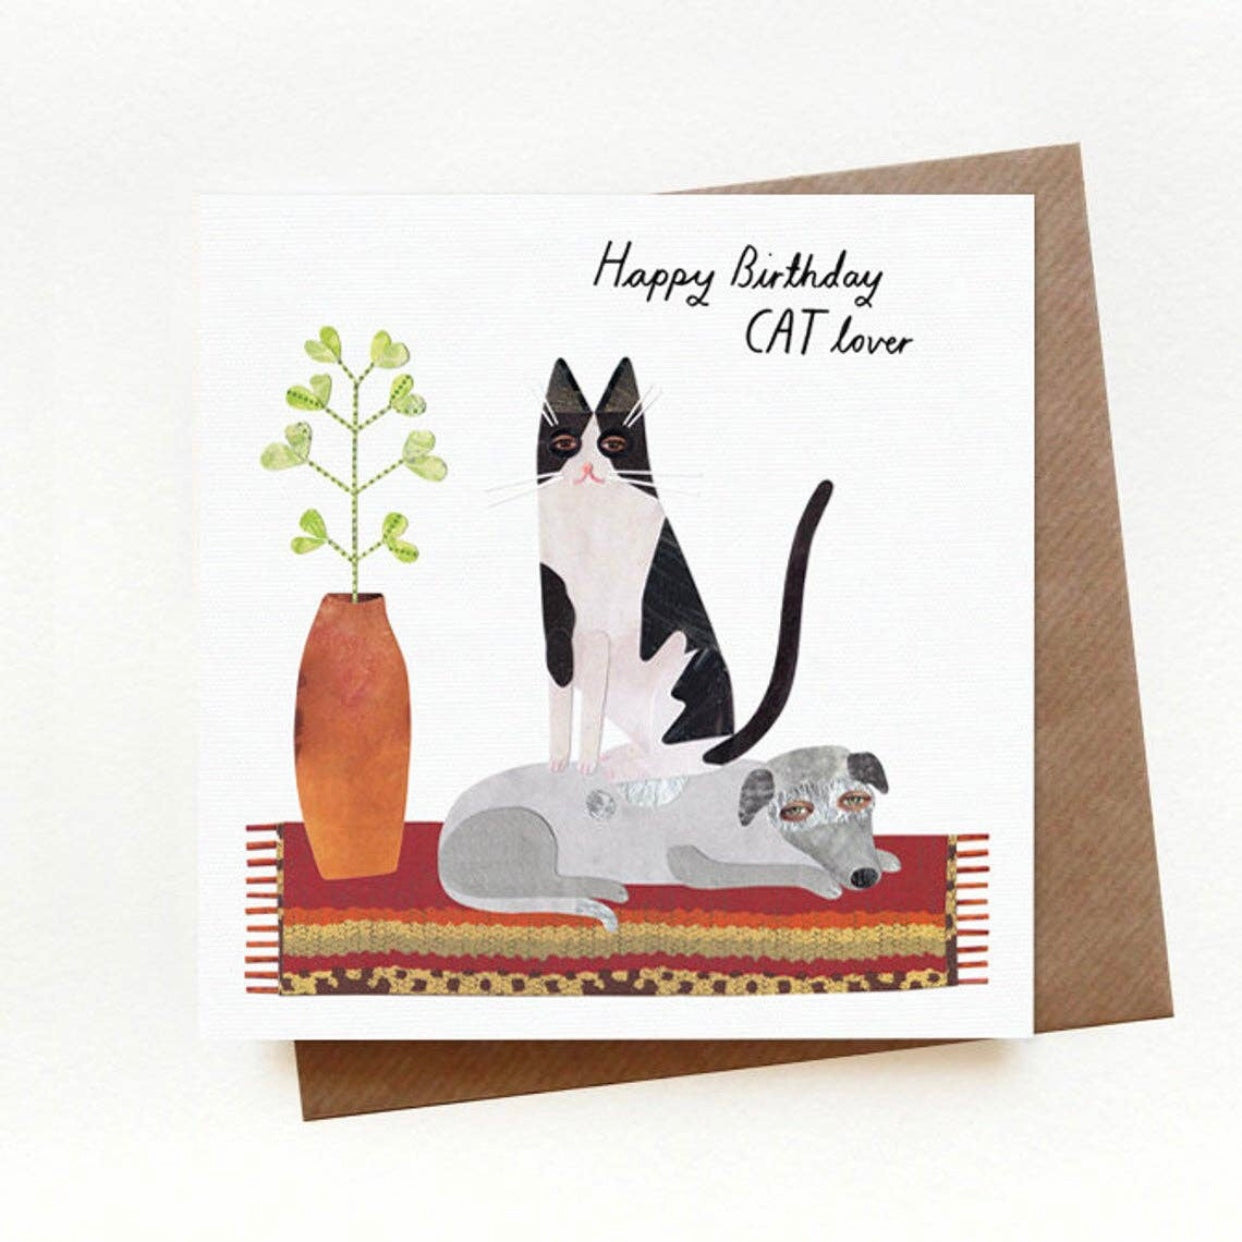 happy birthday cat lover greeting card